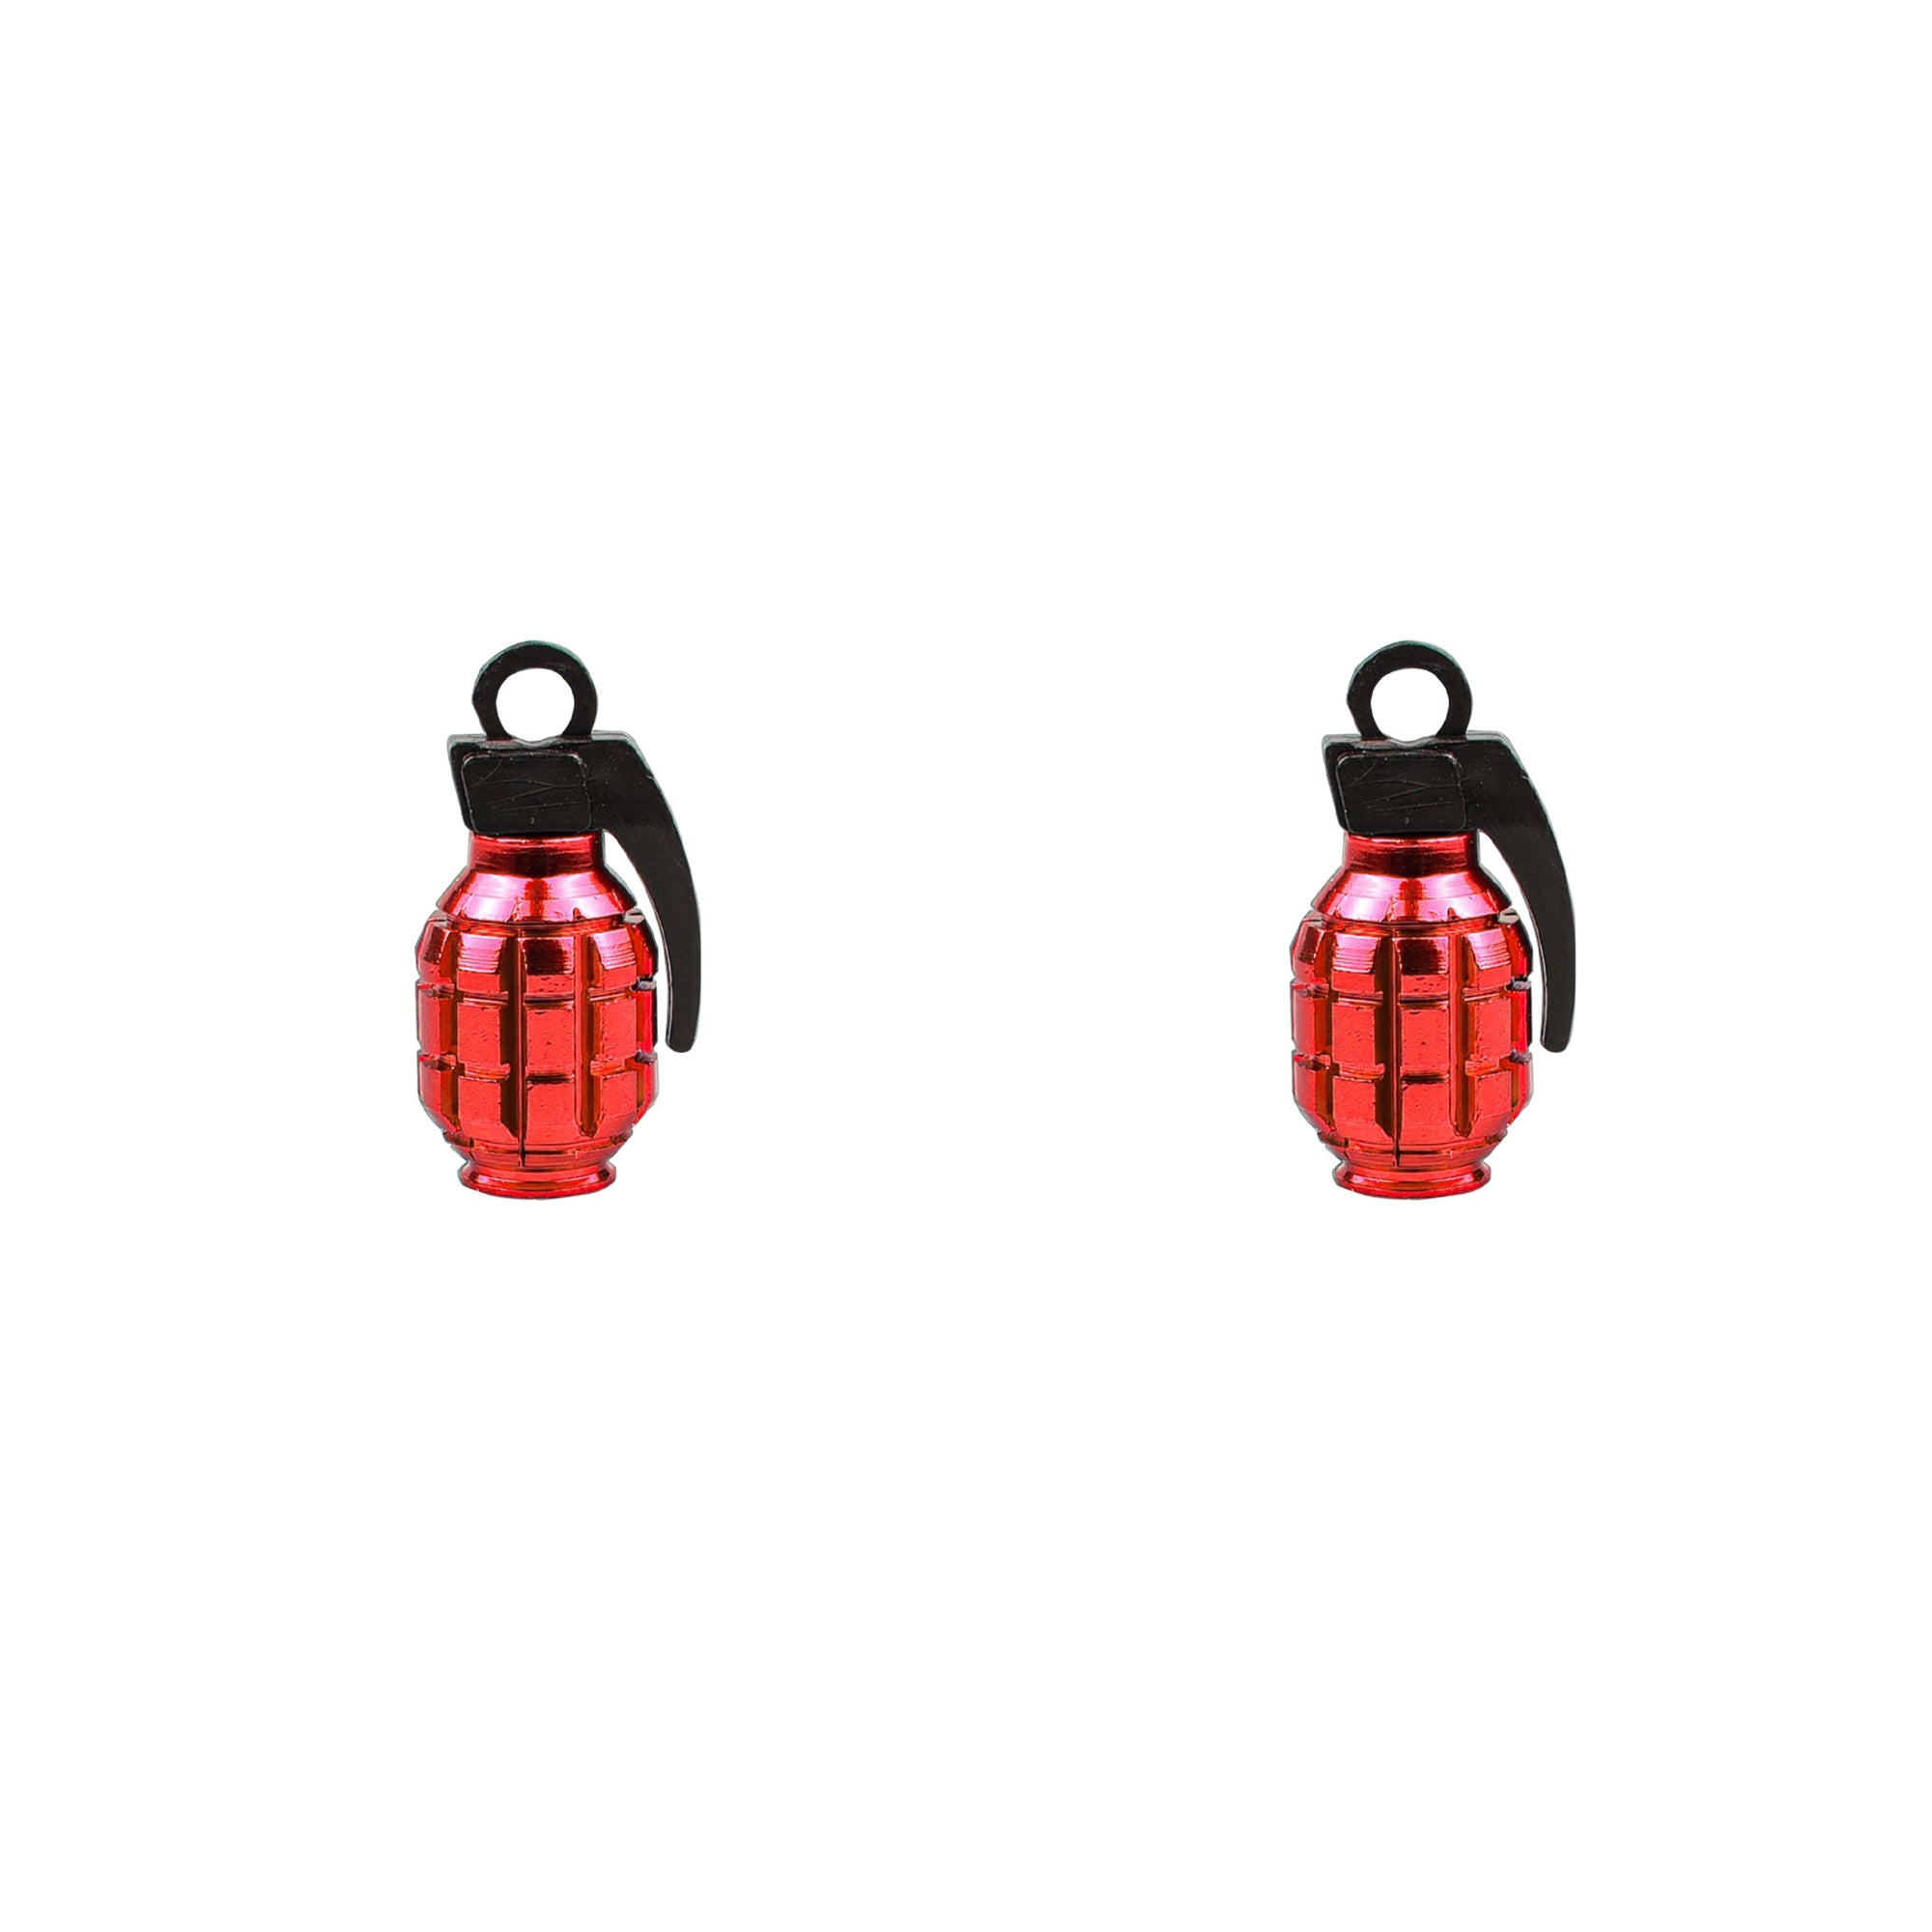 Trik Topz Grenade Valve Caps - Pair - Red